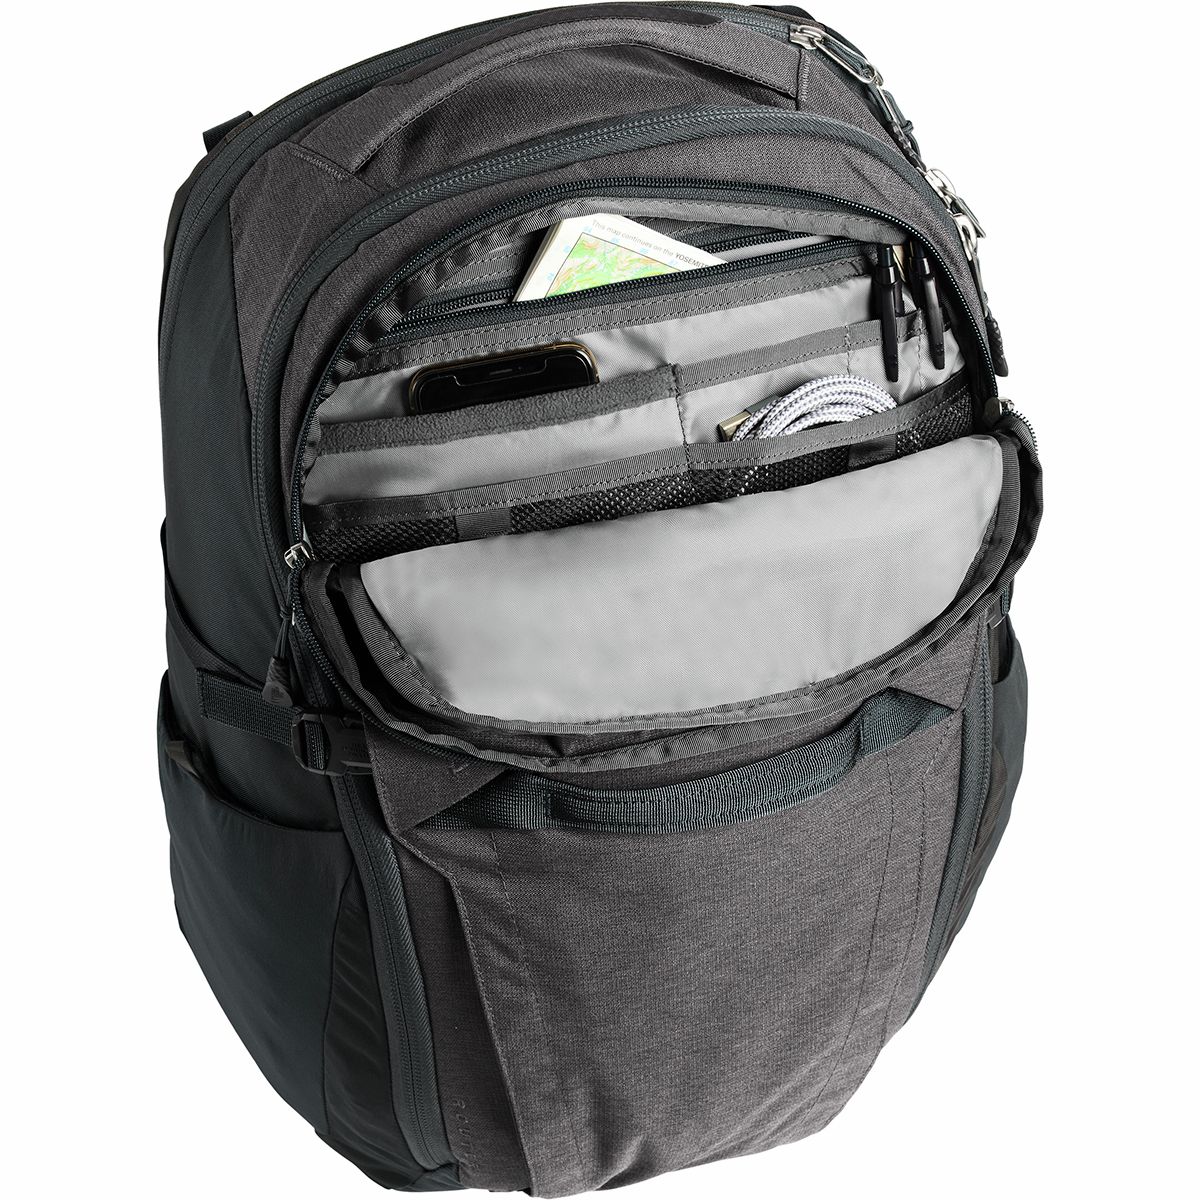 dark grey north face backpack